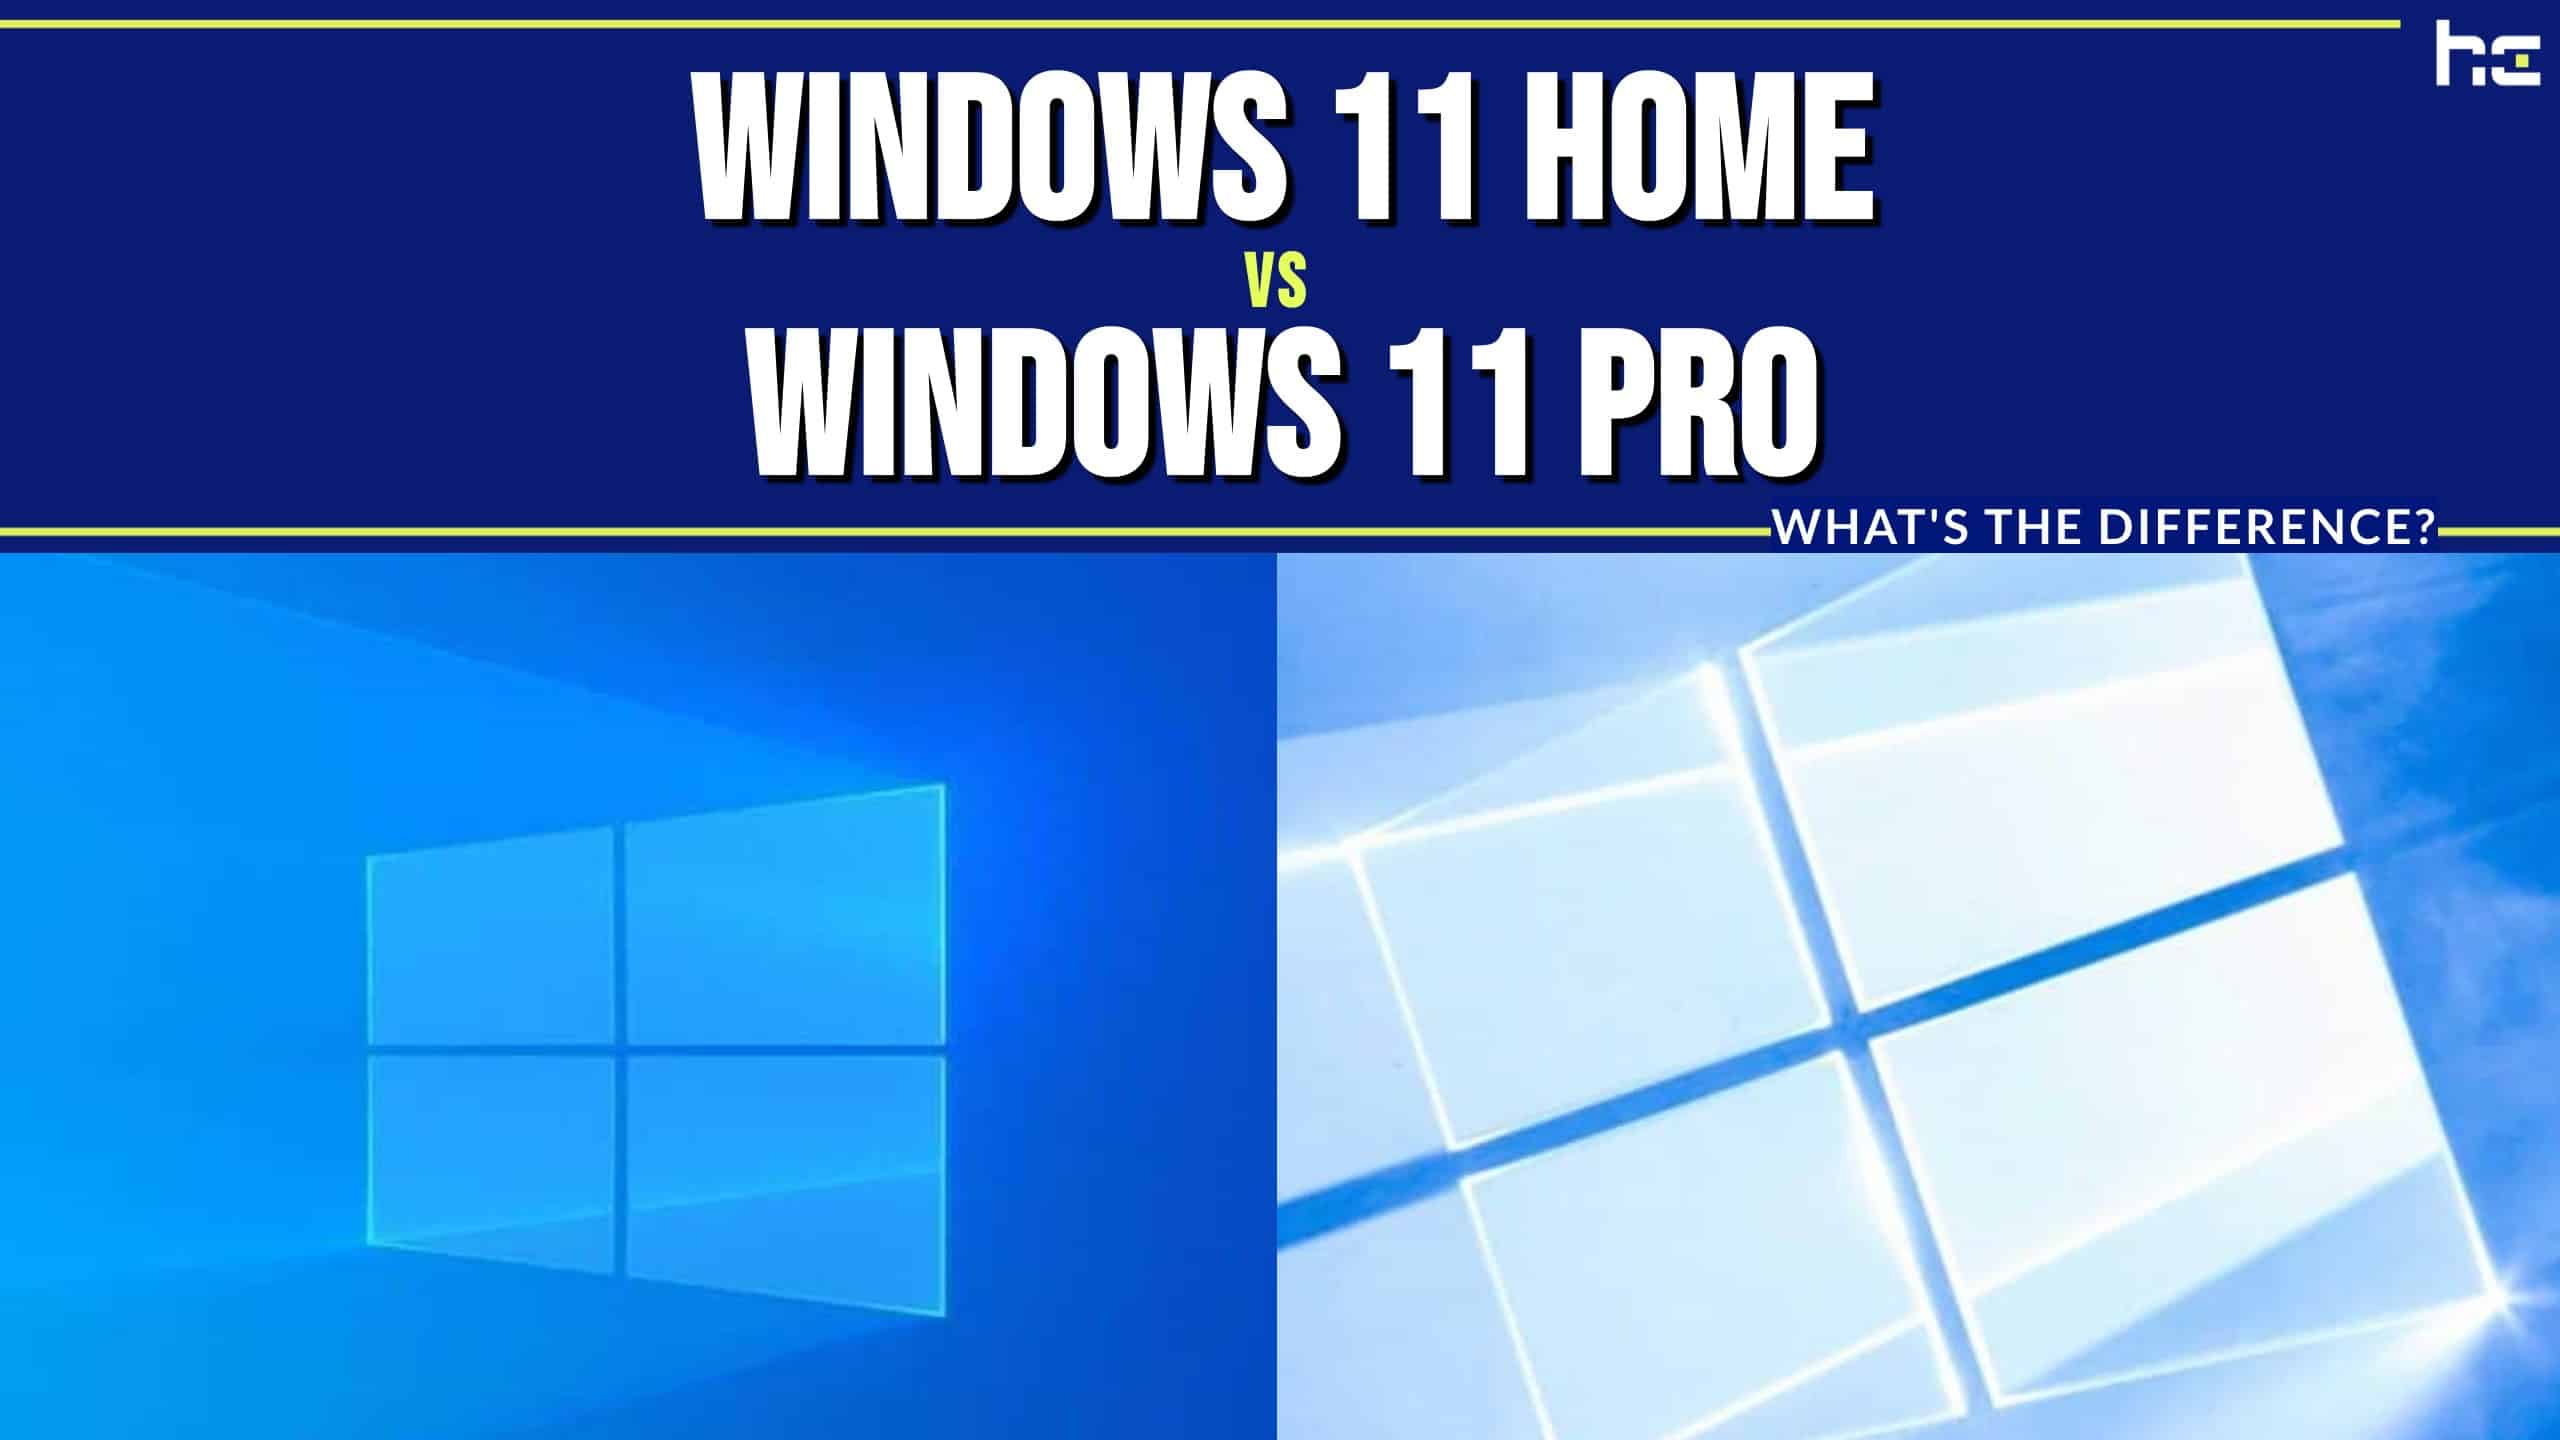 Windows 11 Home vs Windows 11 Pro